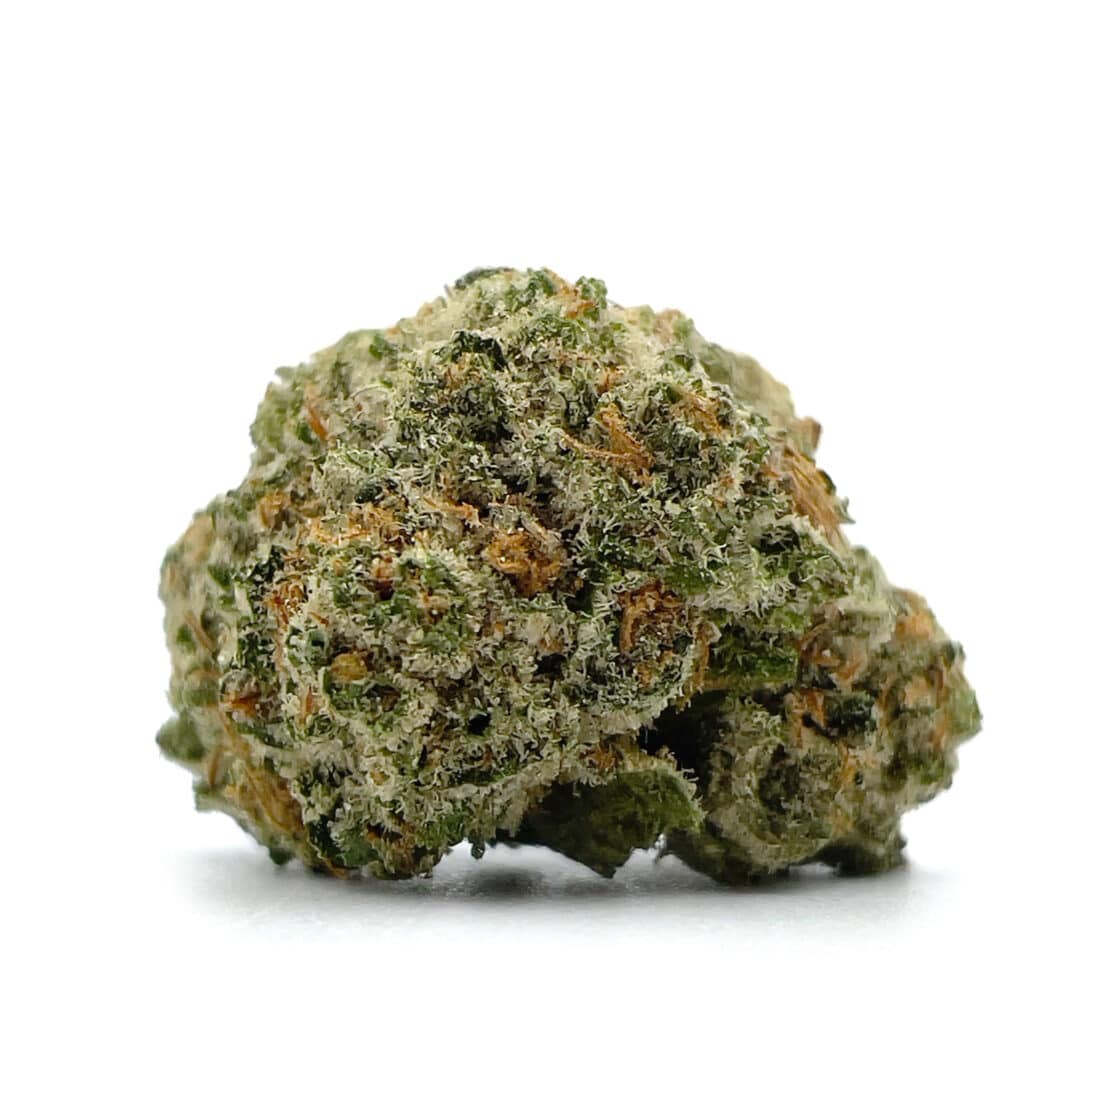 Clementine Cannabis